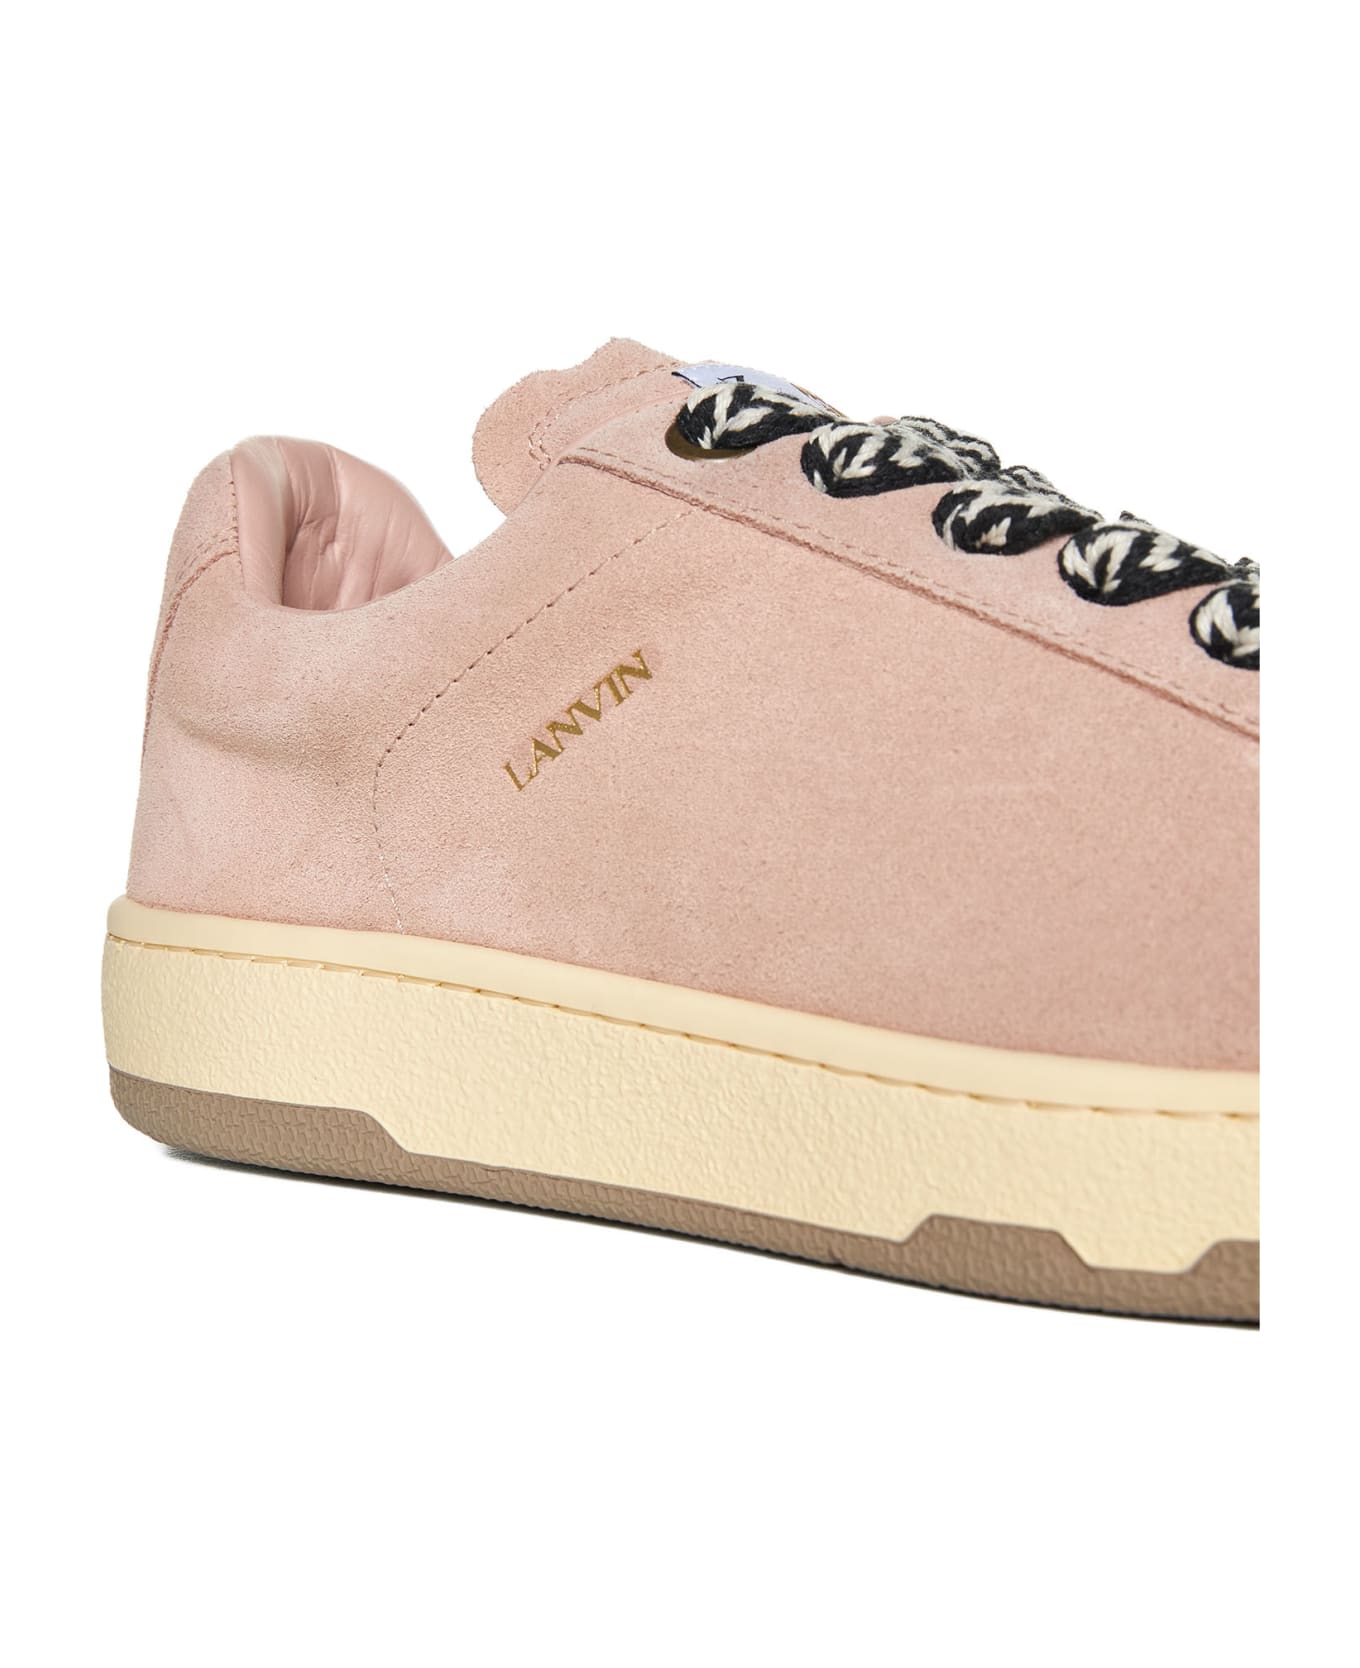 Lanvin Sneakers - Pale Pink スニーカー